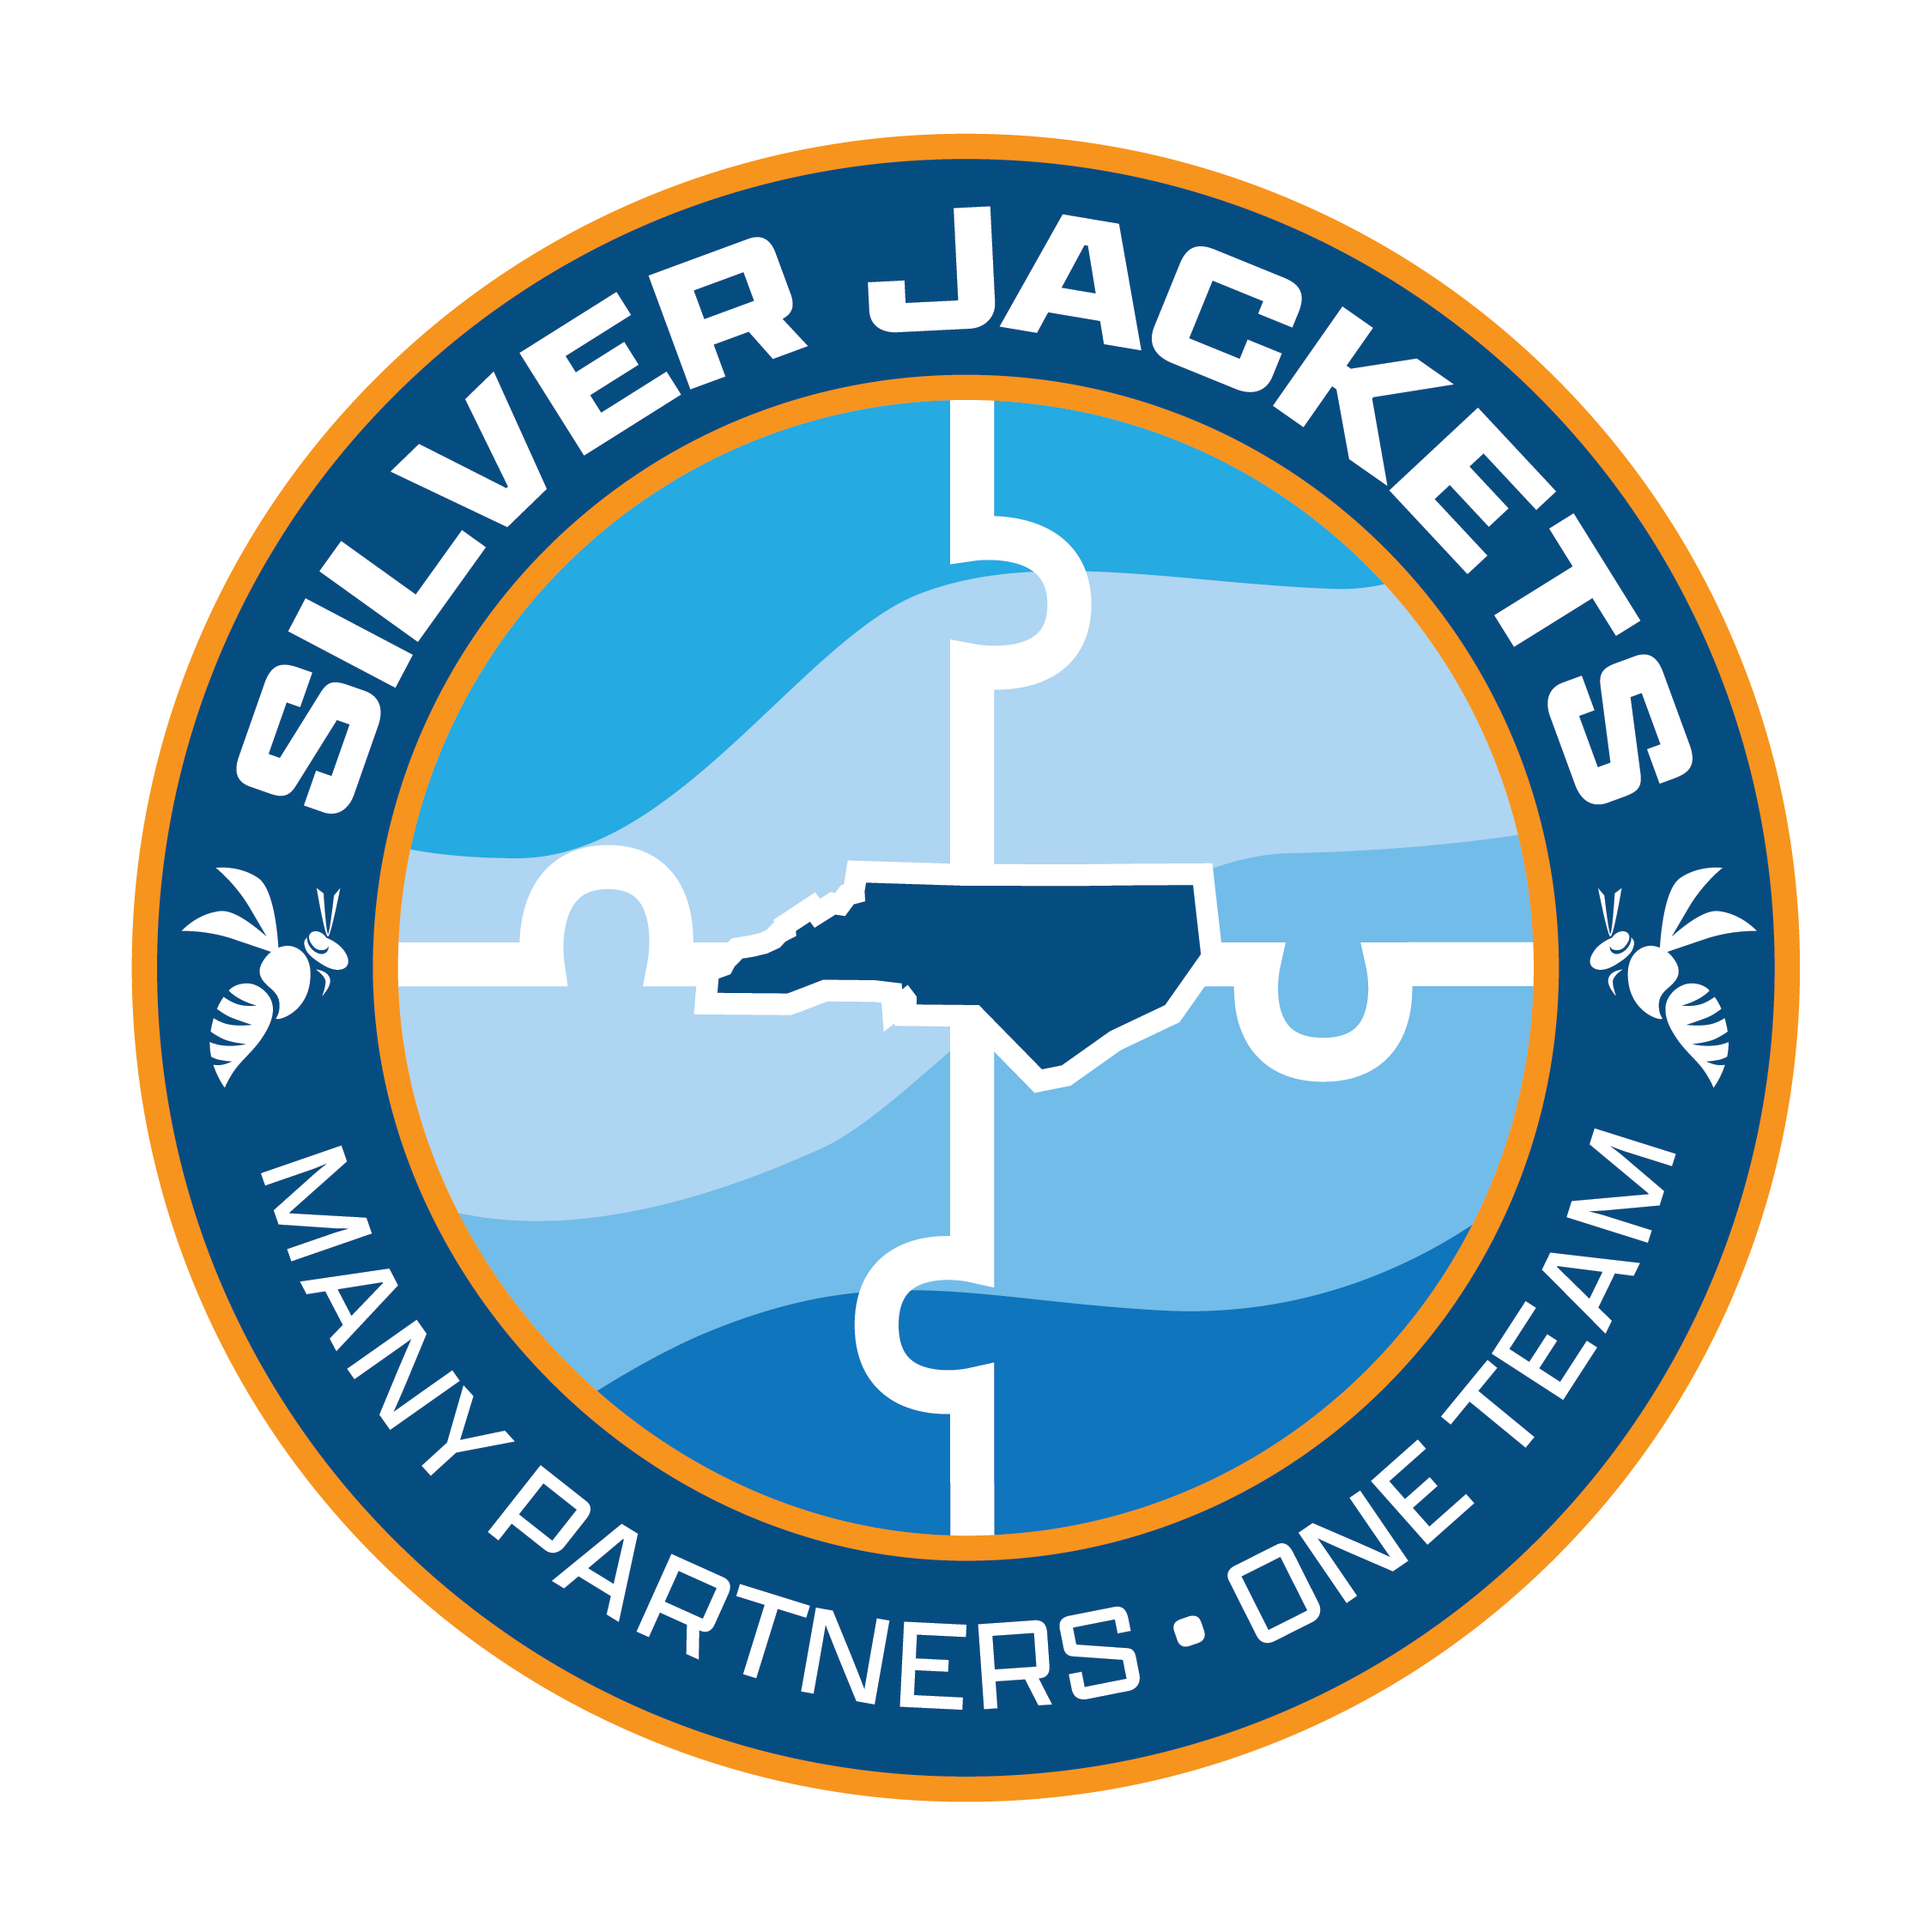 North Carolina Silver Jackets logo